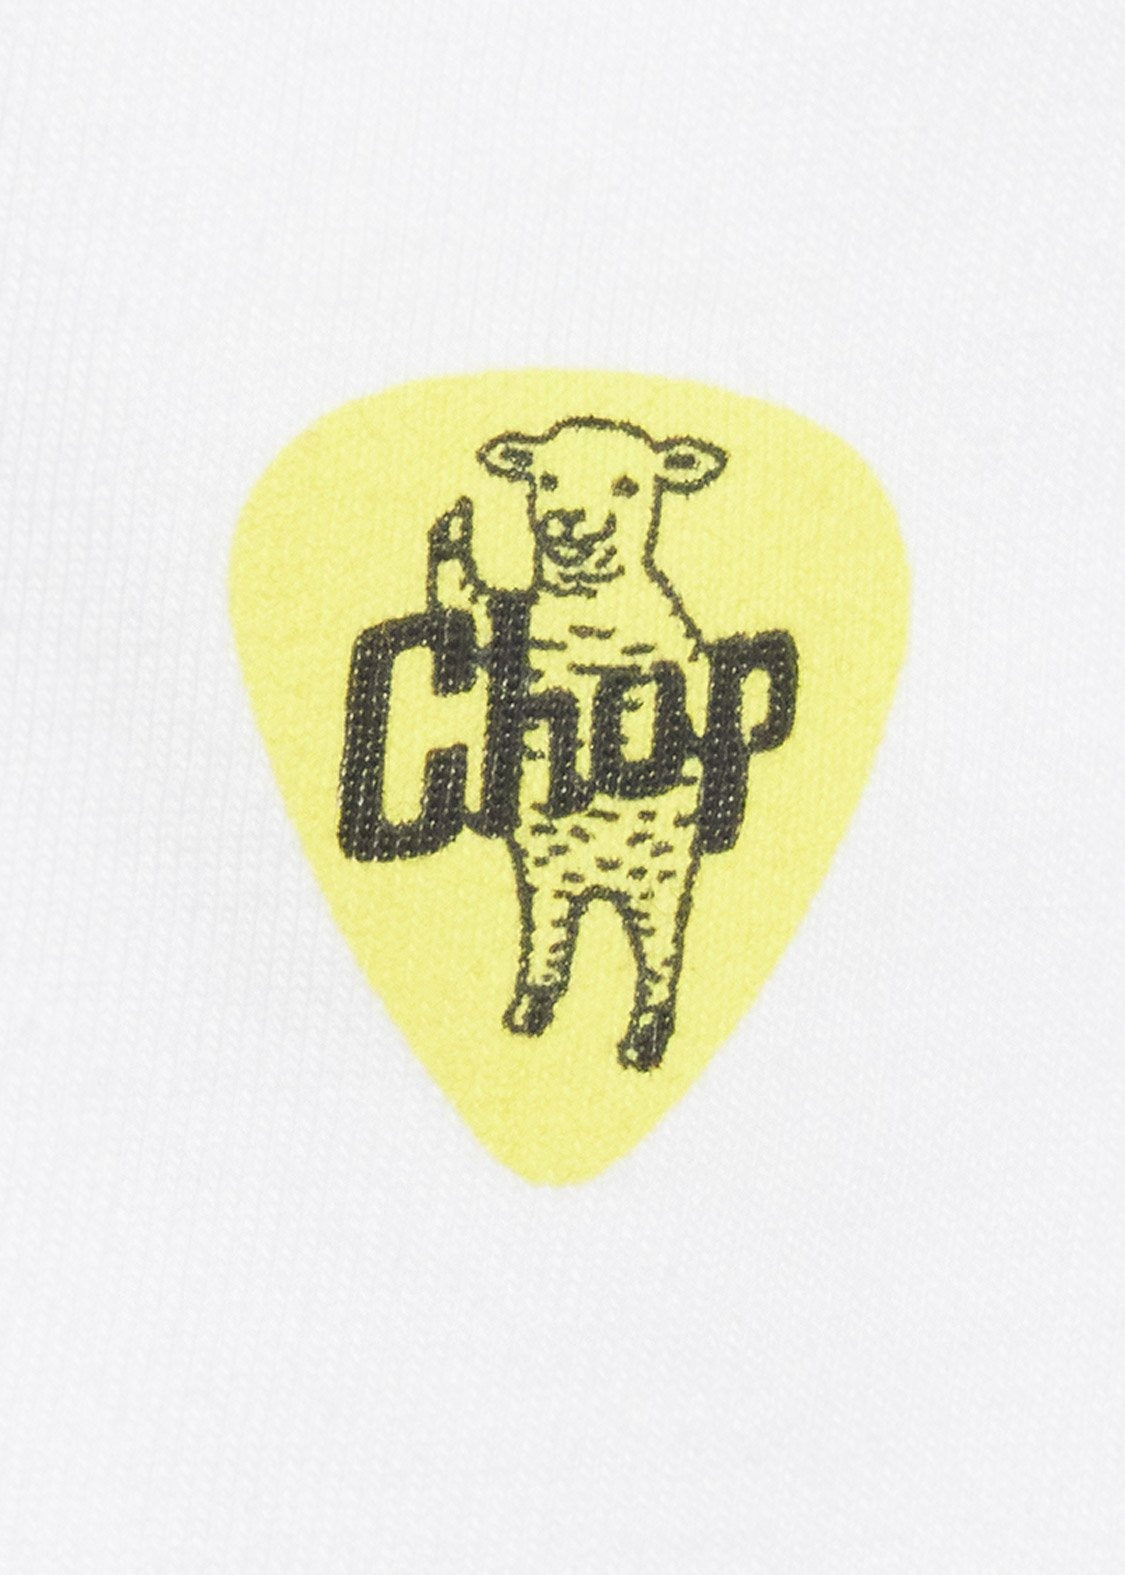 Lamb Chop with Guitar